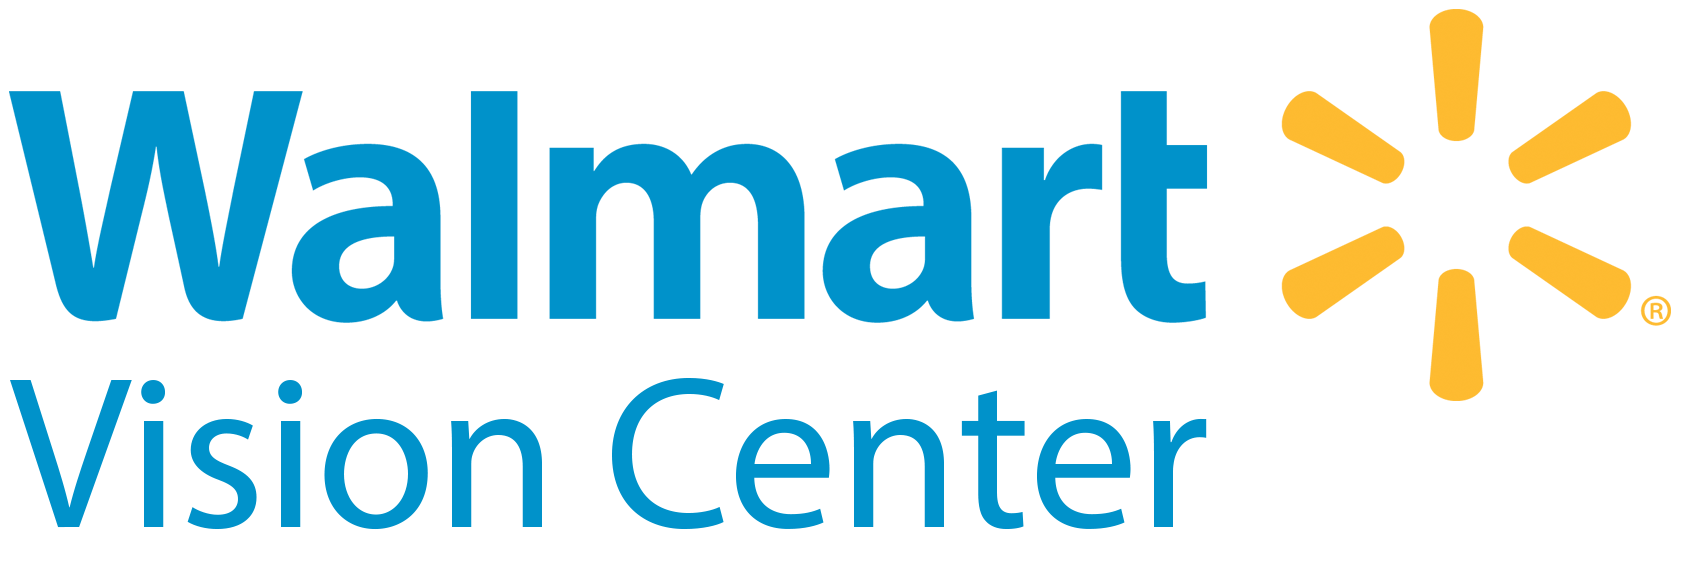 Walmart Vision Center Logo - OSHA and ANSI - The Standard for Safety Glasses